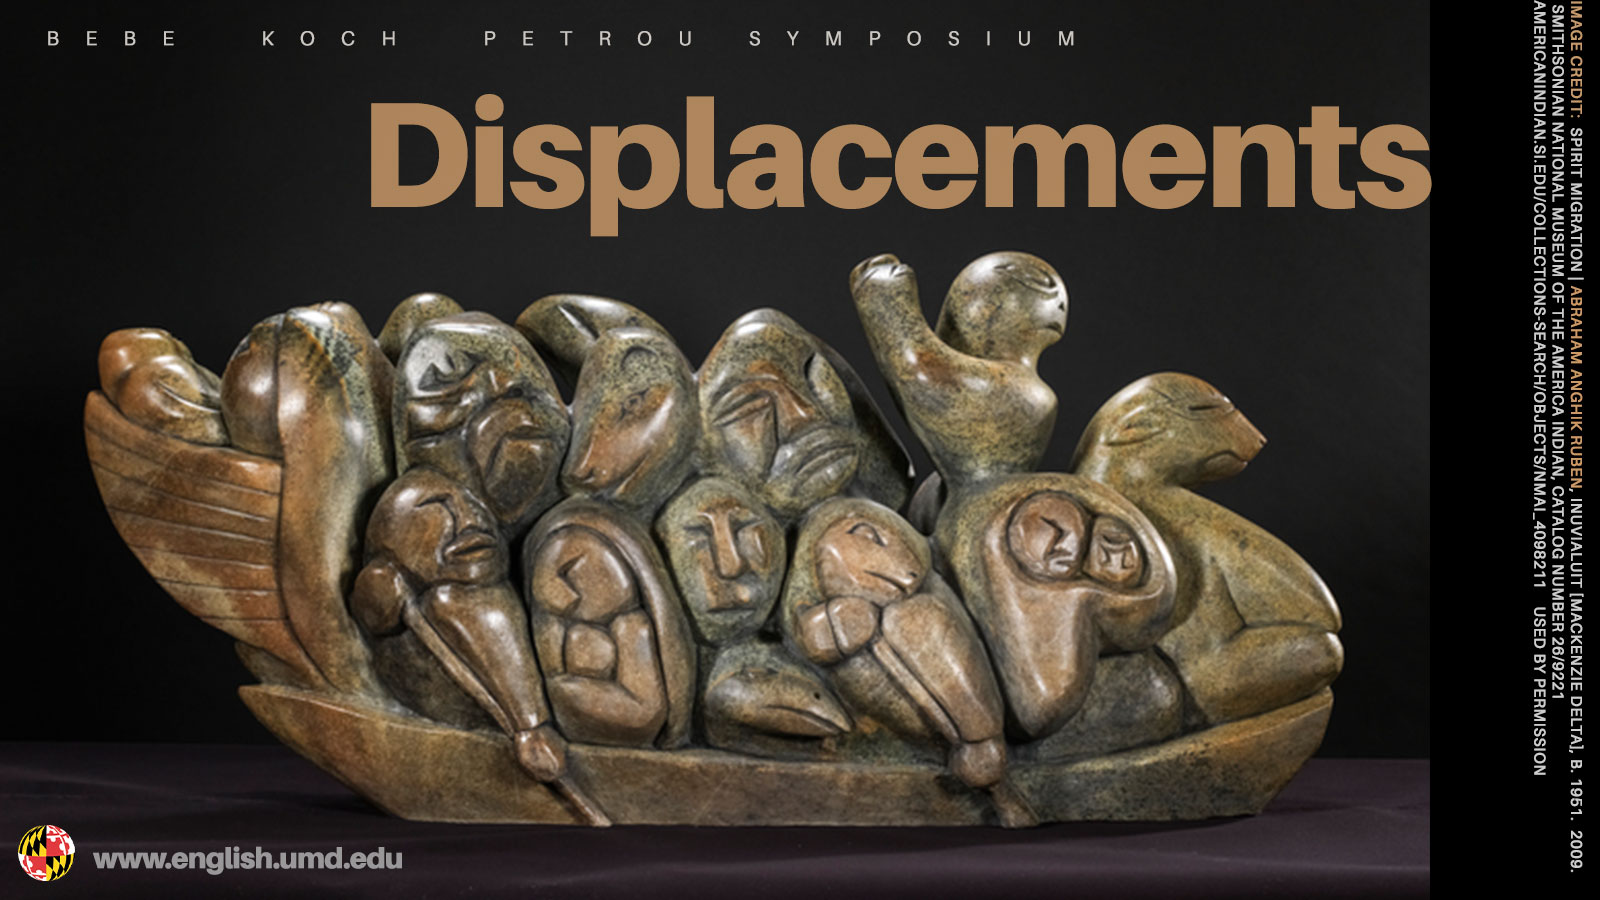 Displacements. Bebe Koch Petrou Symposium. 2024.03.27-28. 2115 Tawes  Hall